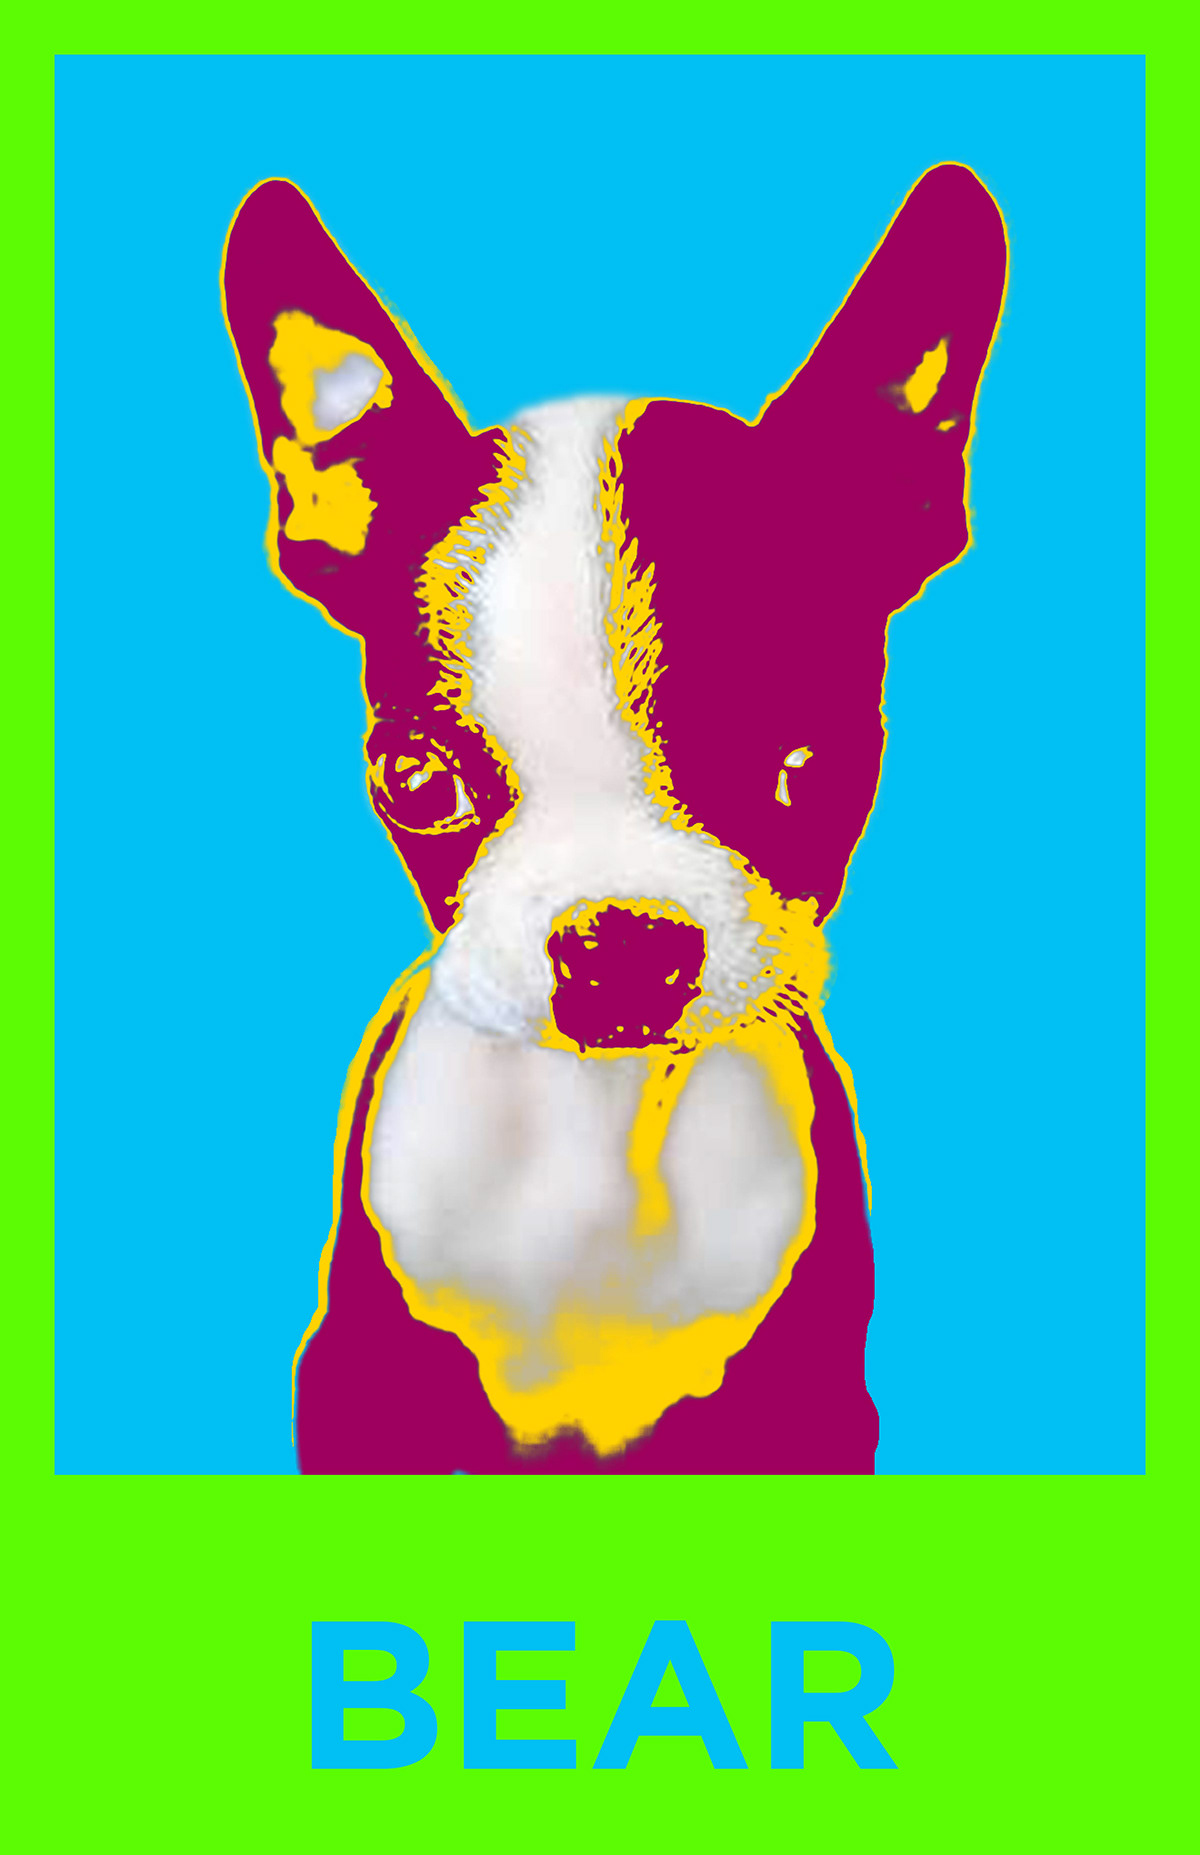 boston terrier boston puppy dog poster Pop Art warhol color photoshop bright Diggy bear monster cute animals